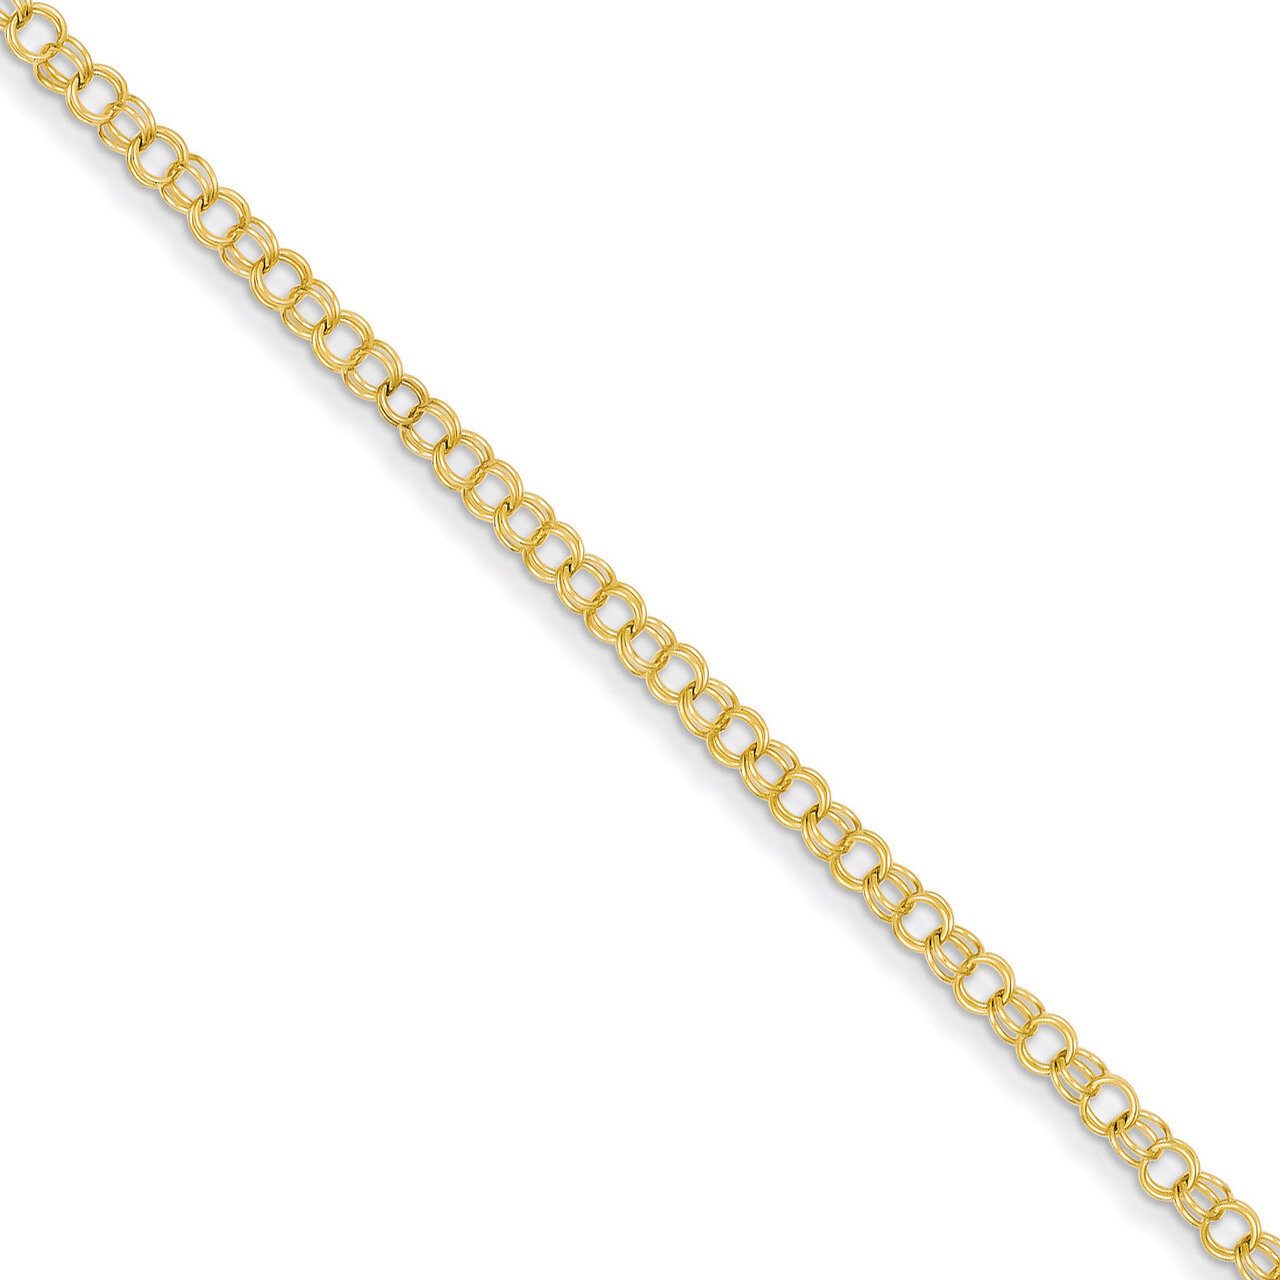 3.5mm Solid Double Link Charm Bracelet 7 Inch 14k Gold DO554-7